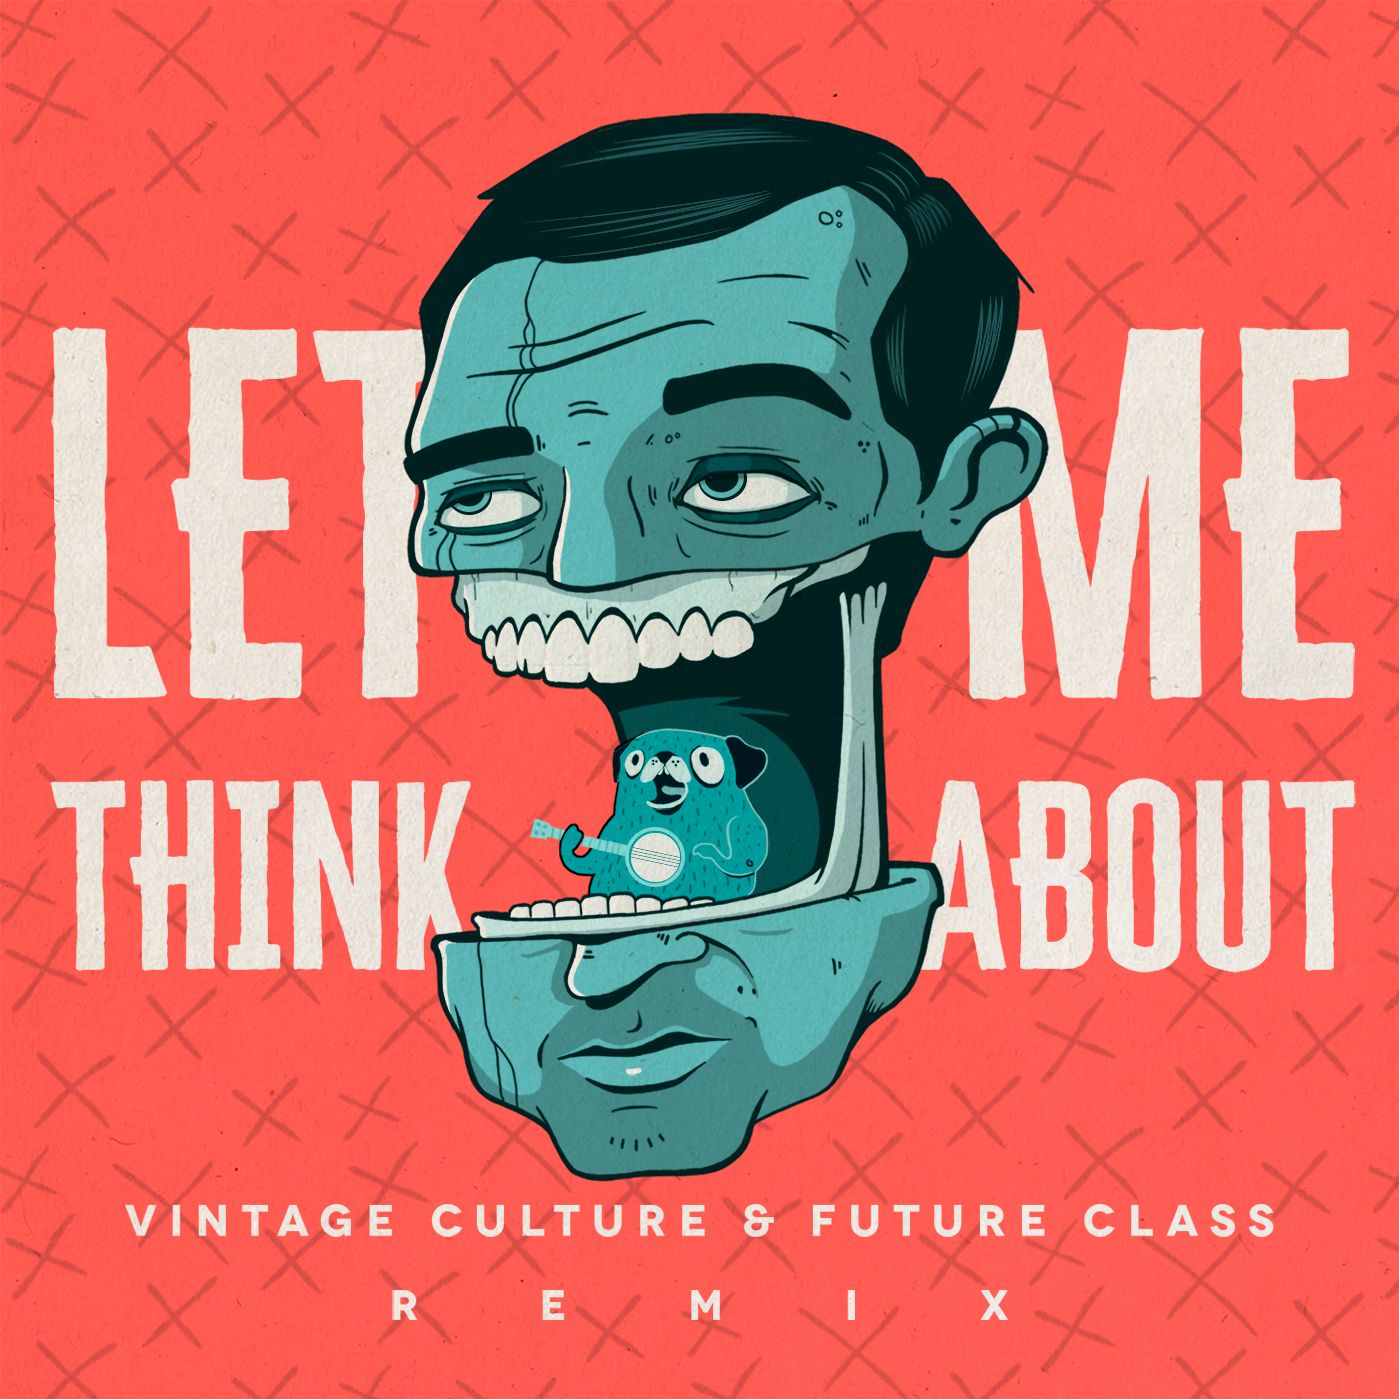 ਡਾਉਨਲੋਡ ਕਰੋ Vintage Culture & Future Class - Let Me Think About